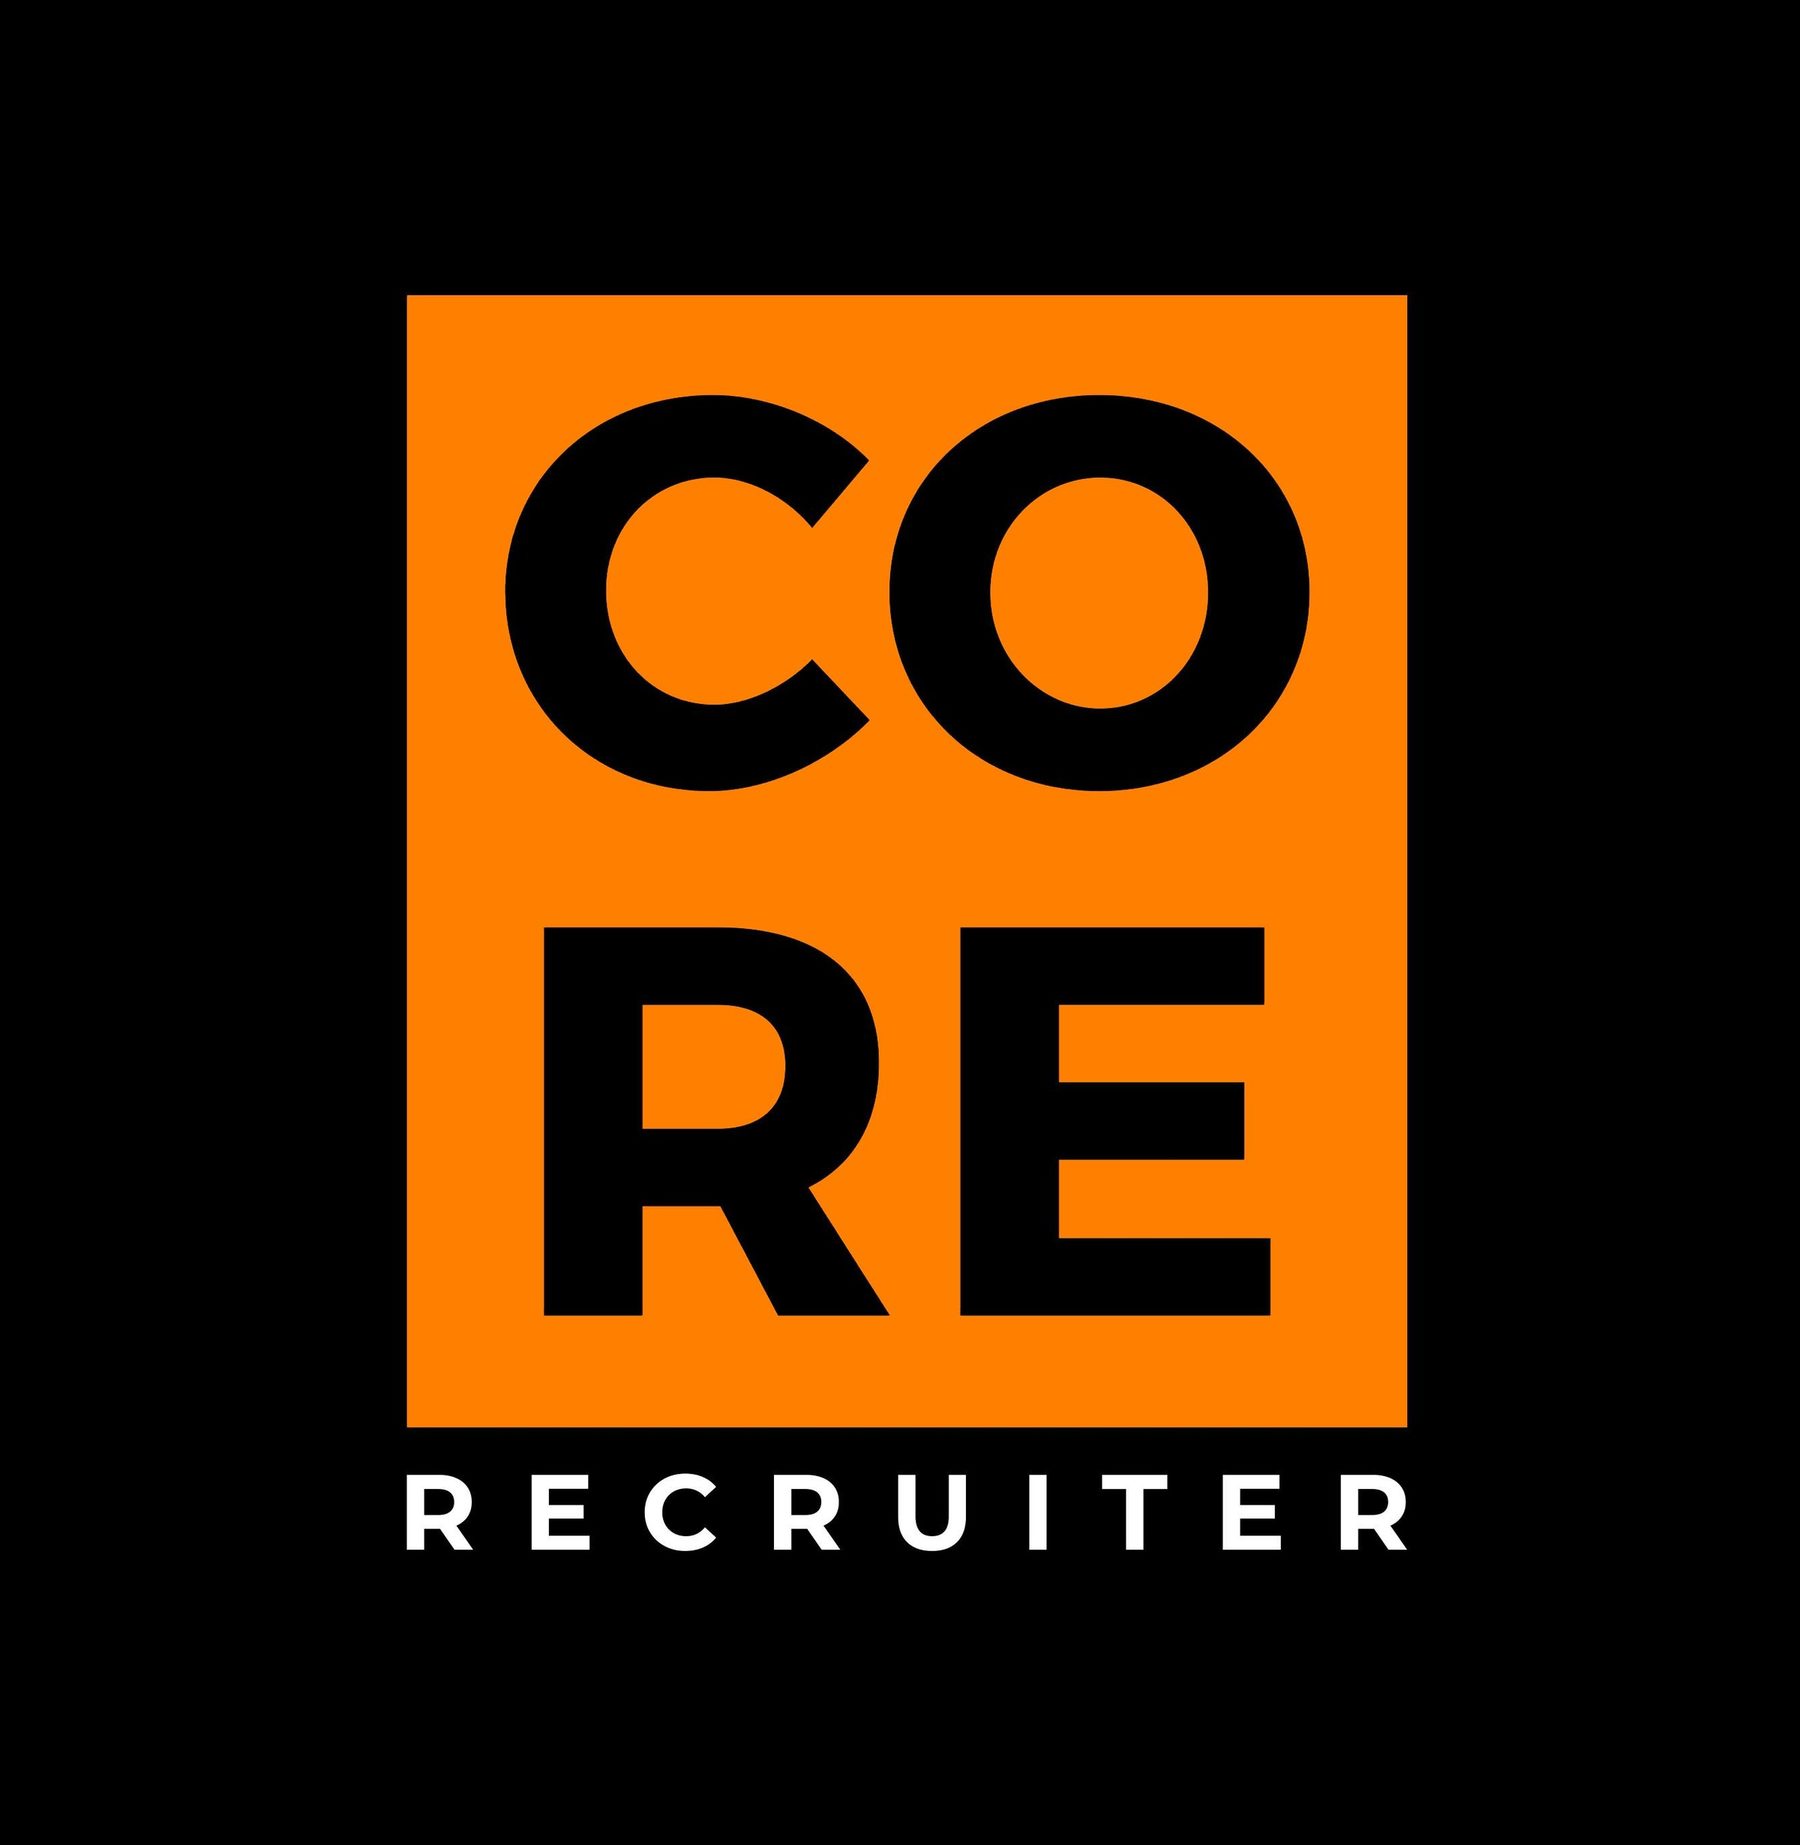 Company Logo (Core Recruiter)